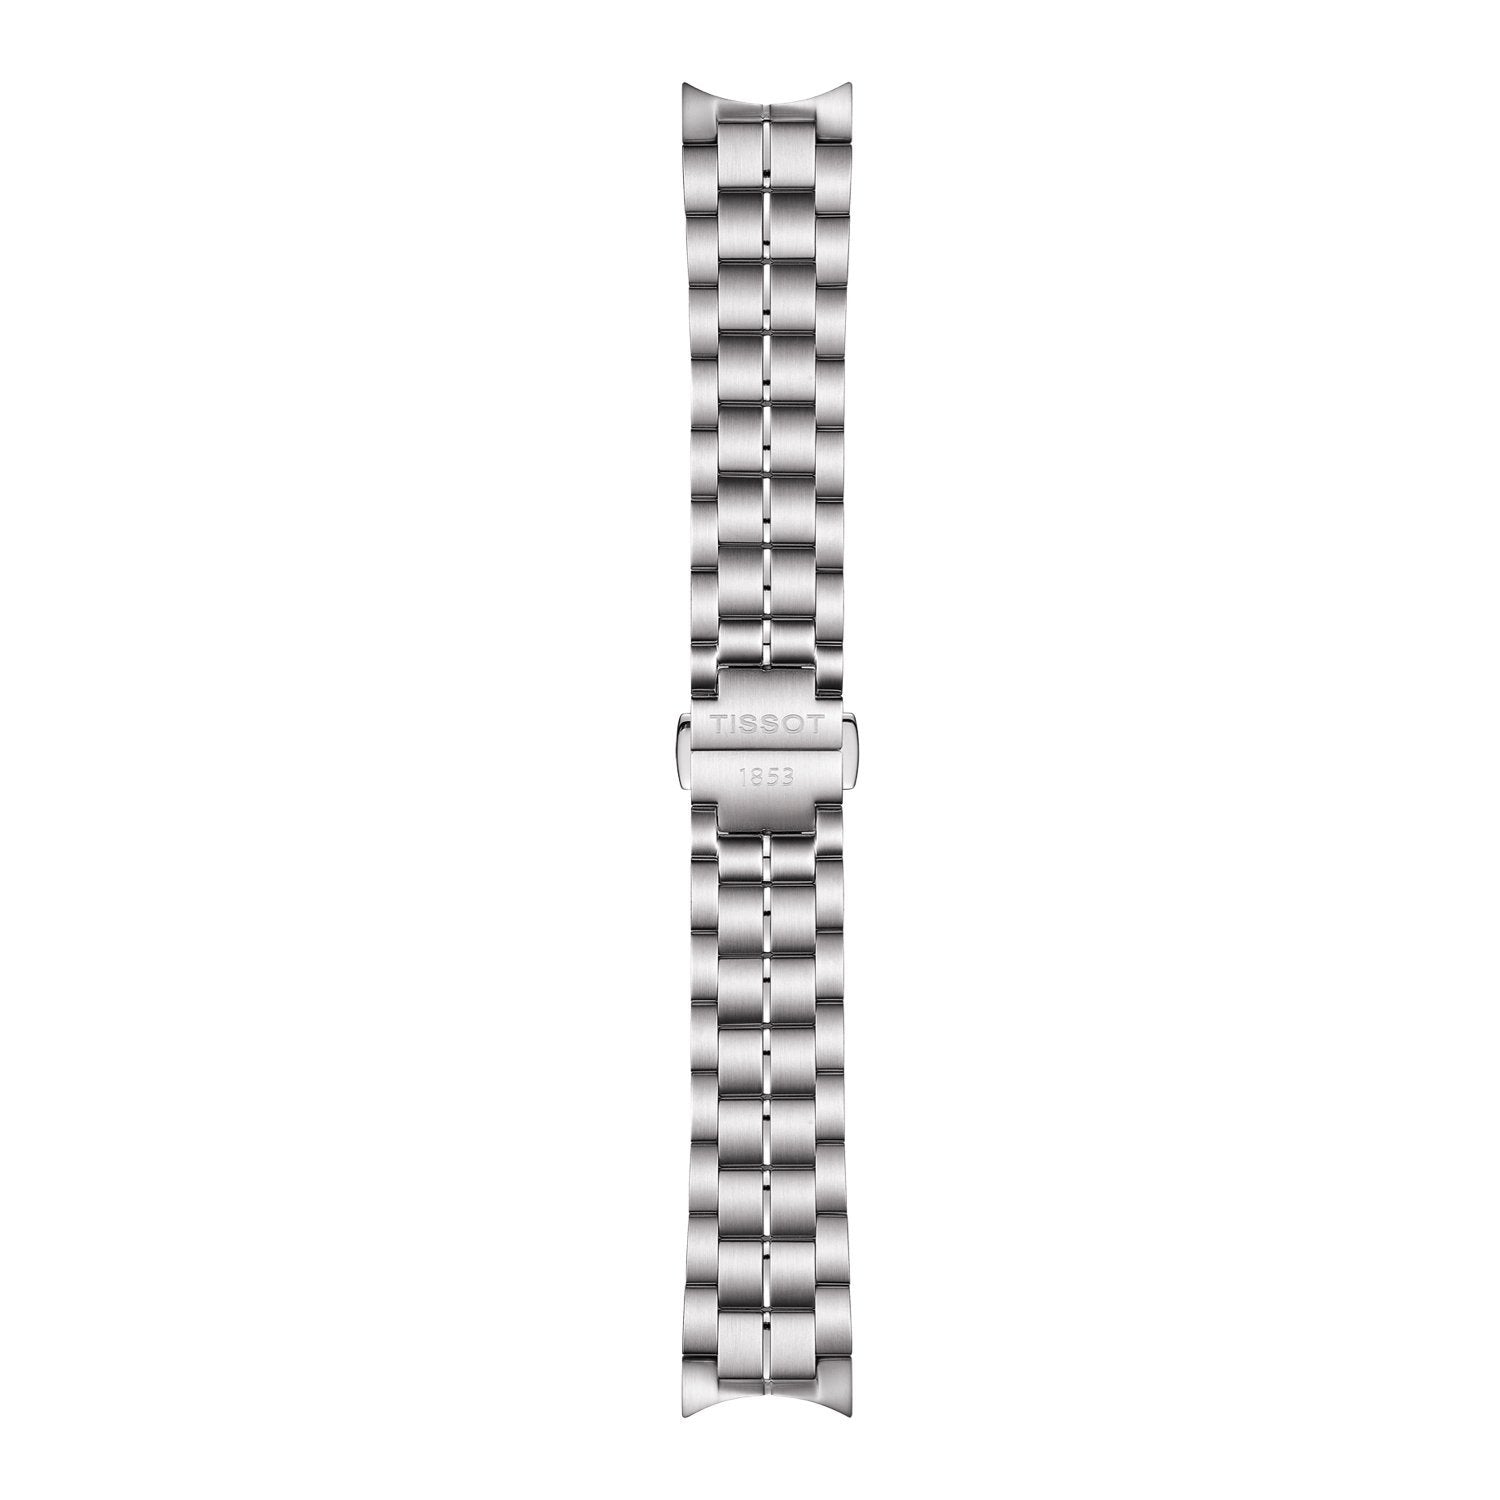 Genuine Tissot 18mm Luxury Stainless steel bracelet by Tissot